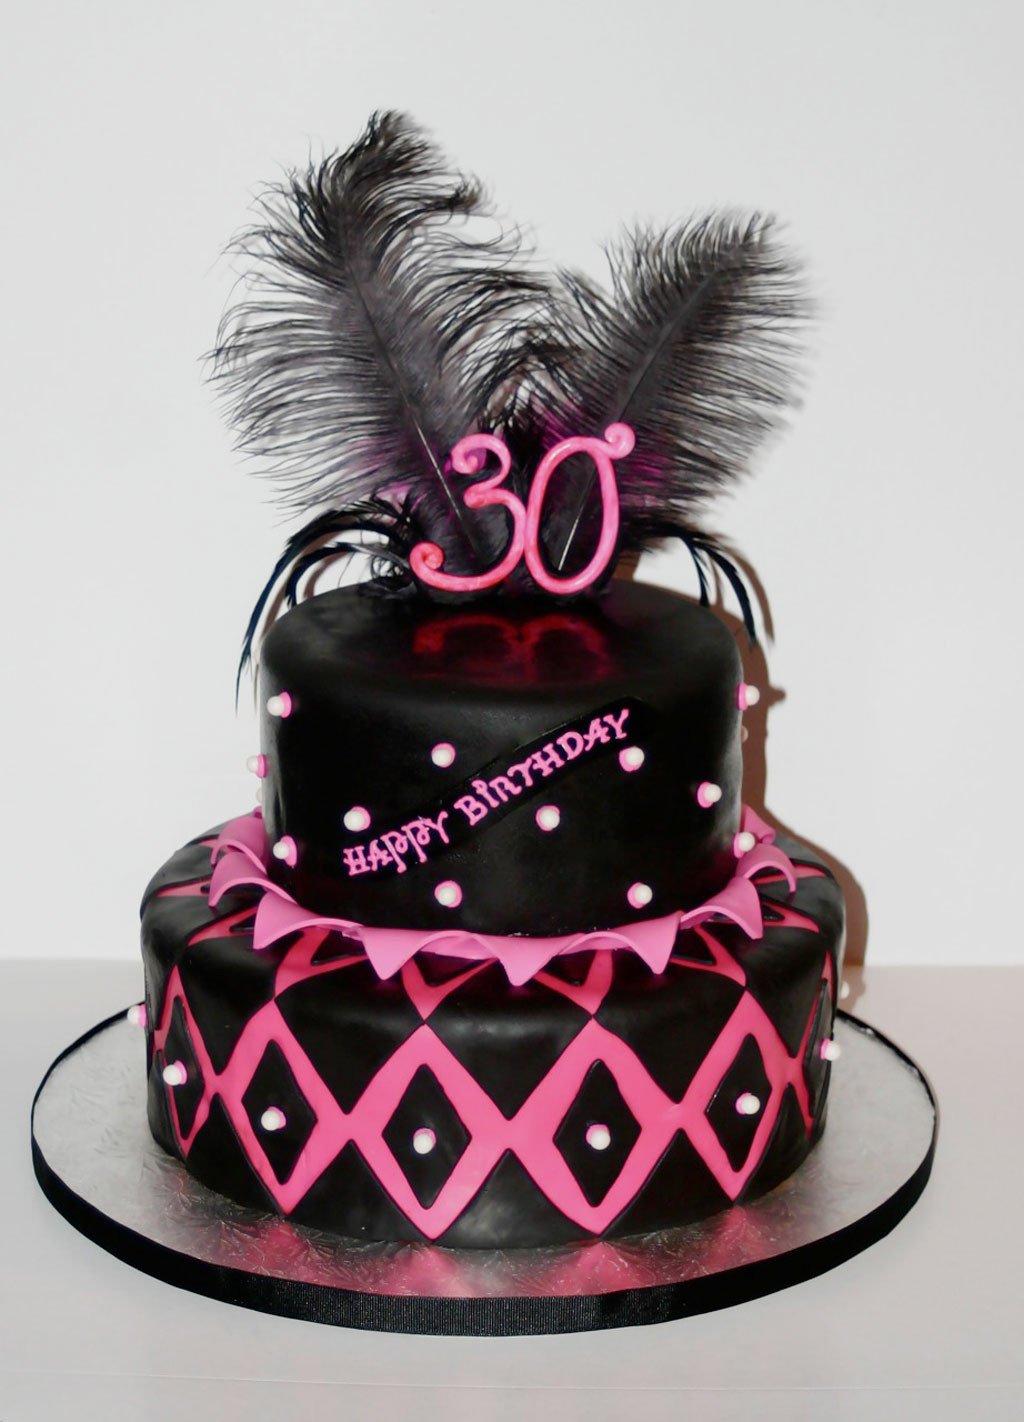 Черно розовый торт. Торт черно розовый. Черно розовый торт для девушки. Торт черный с розовым. Черно розовый торт для девочки.